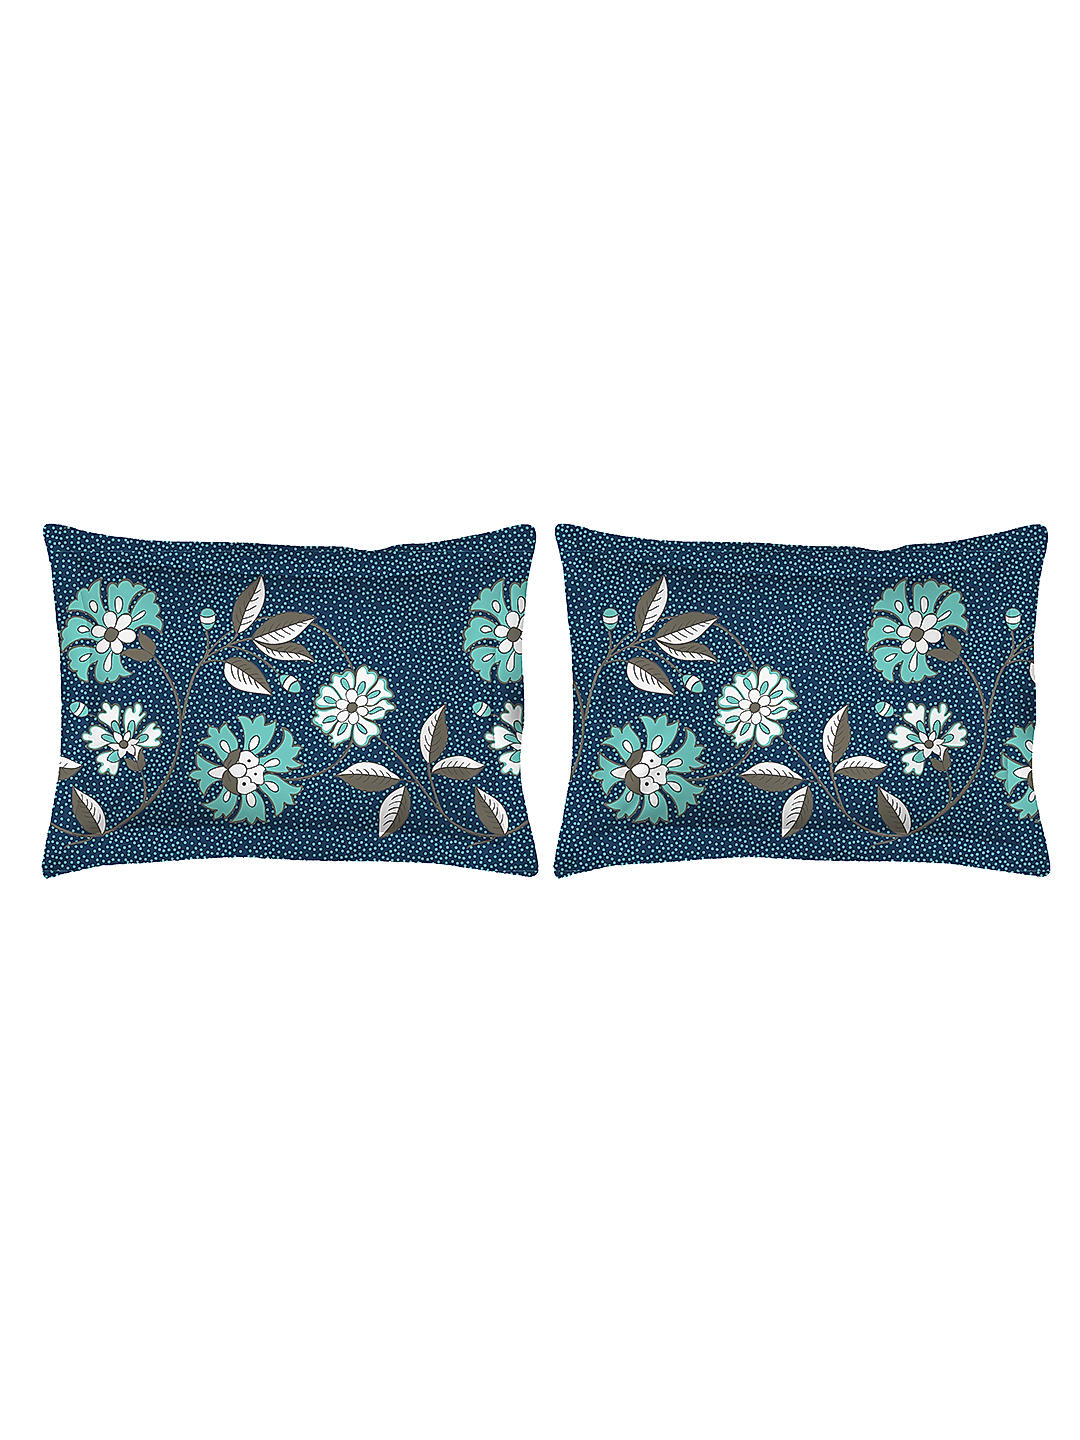 Erica Colorful Pure Cotton 112 Tc Double Bedsheet Set (Blue & Teal)